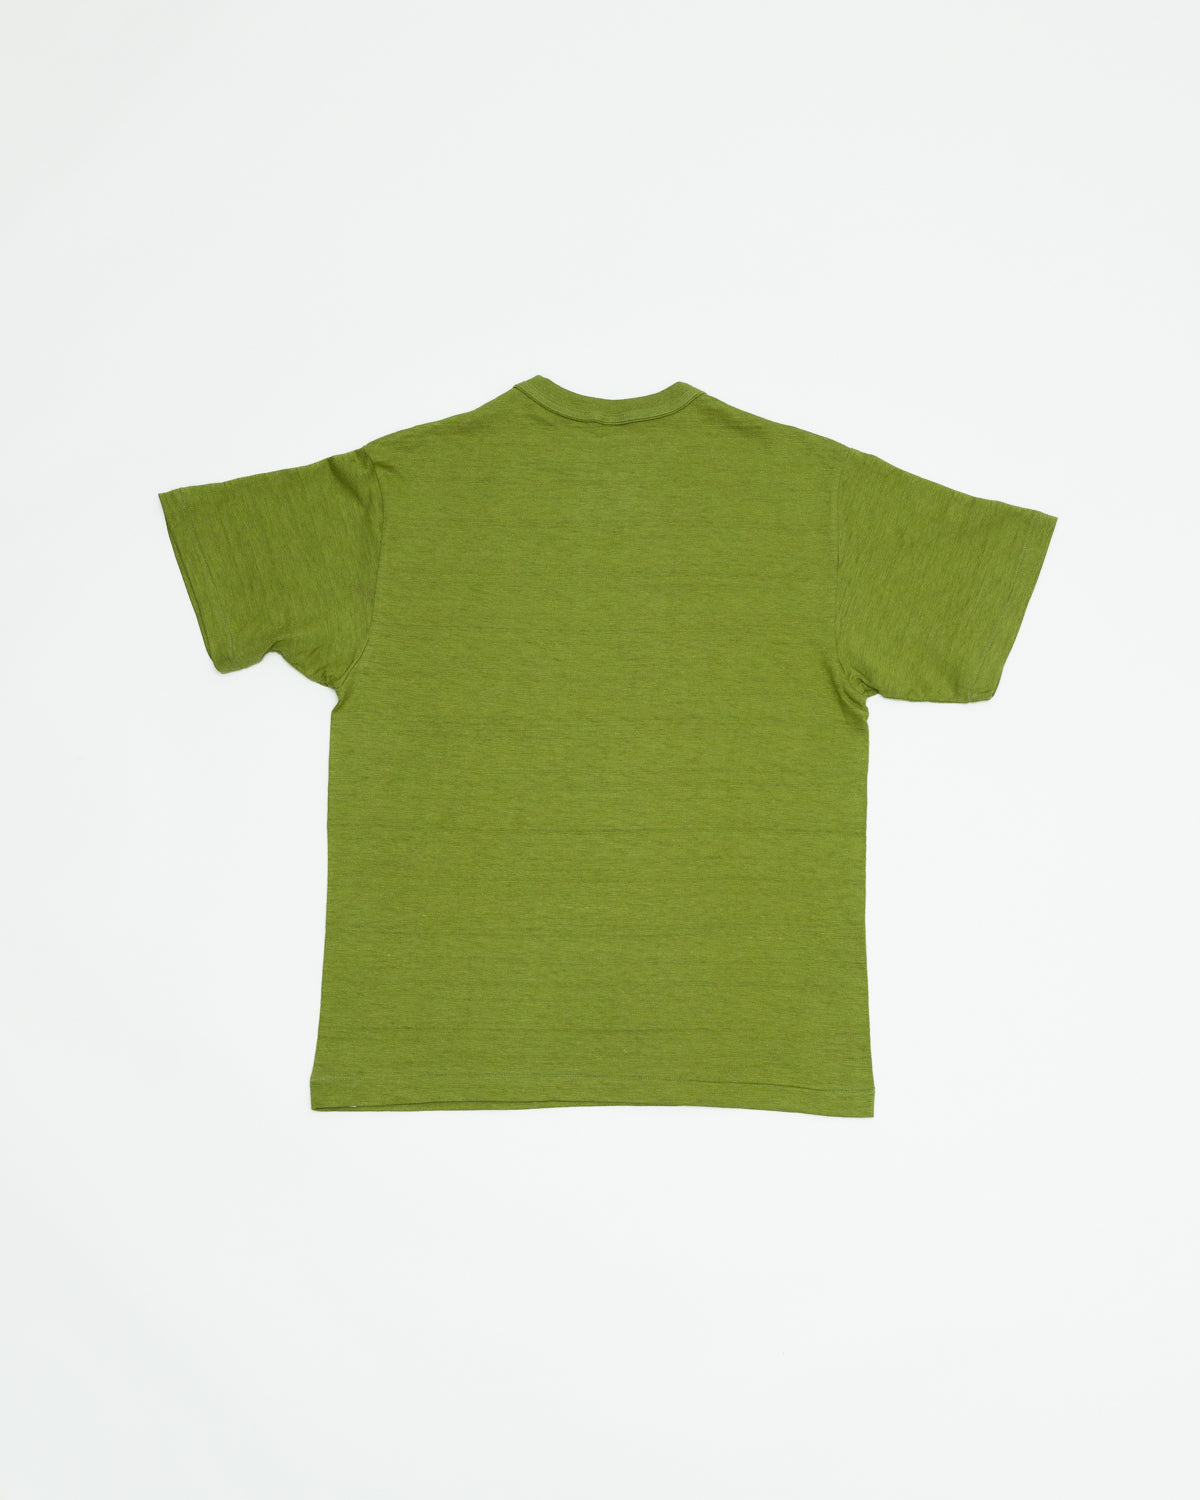 Lot 4601P - Slubby Cotton Pocket T-Shirt - Grass Green